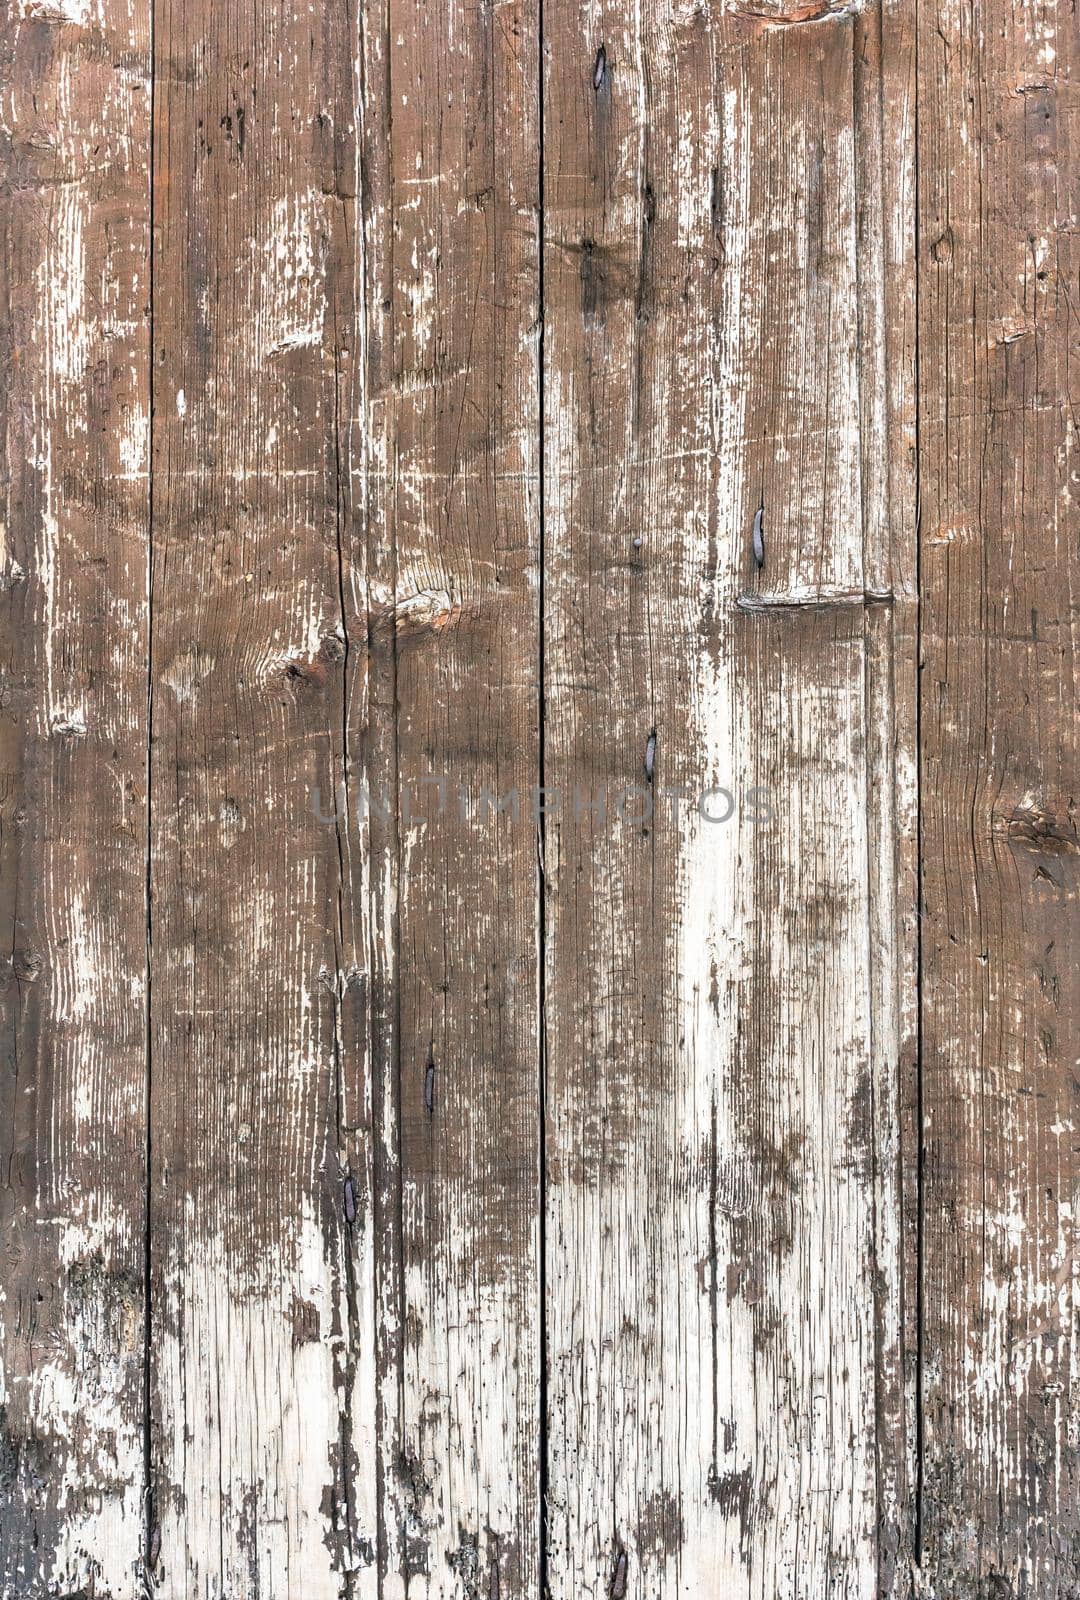 Old wooden plankswith peeling paint by germanopoli